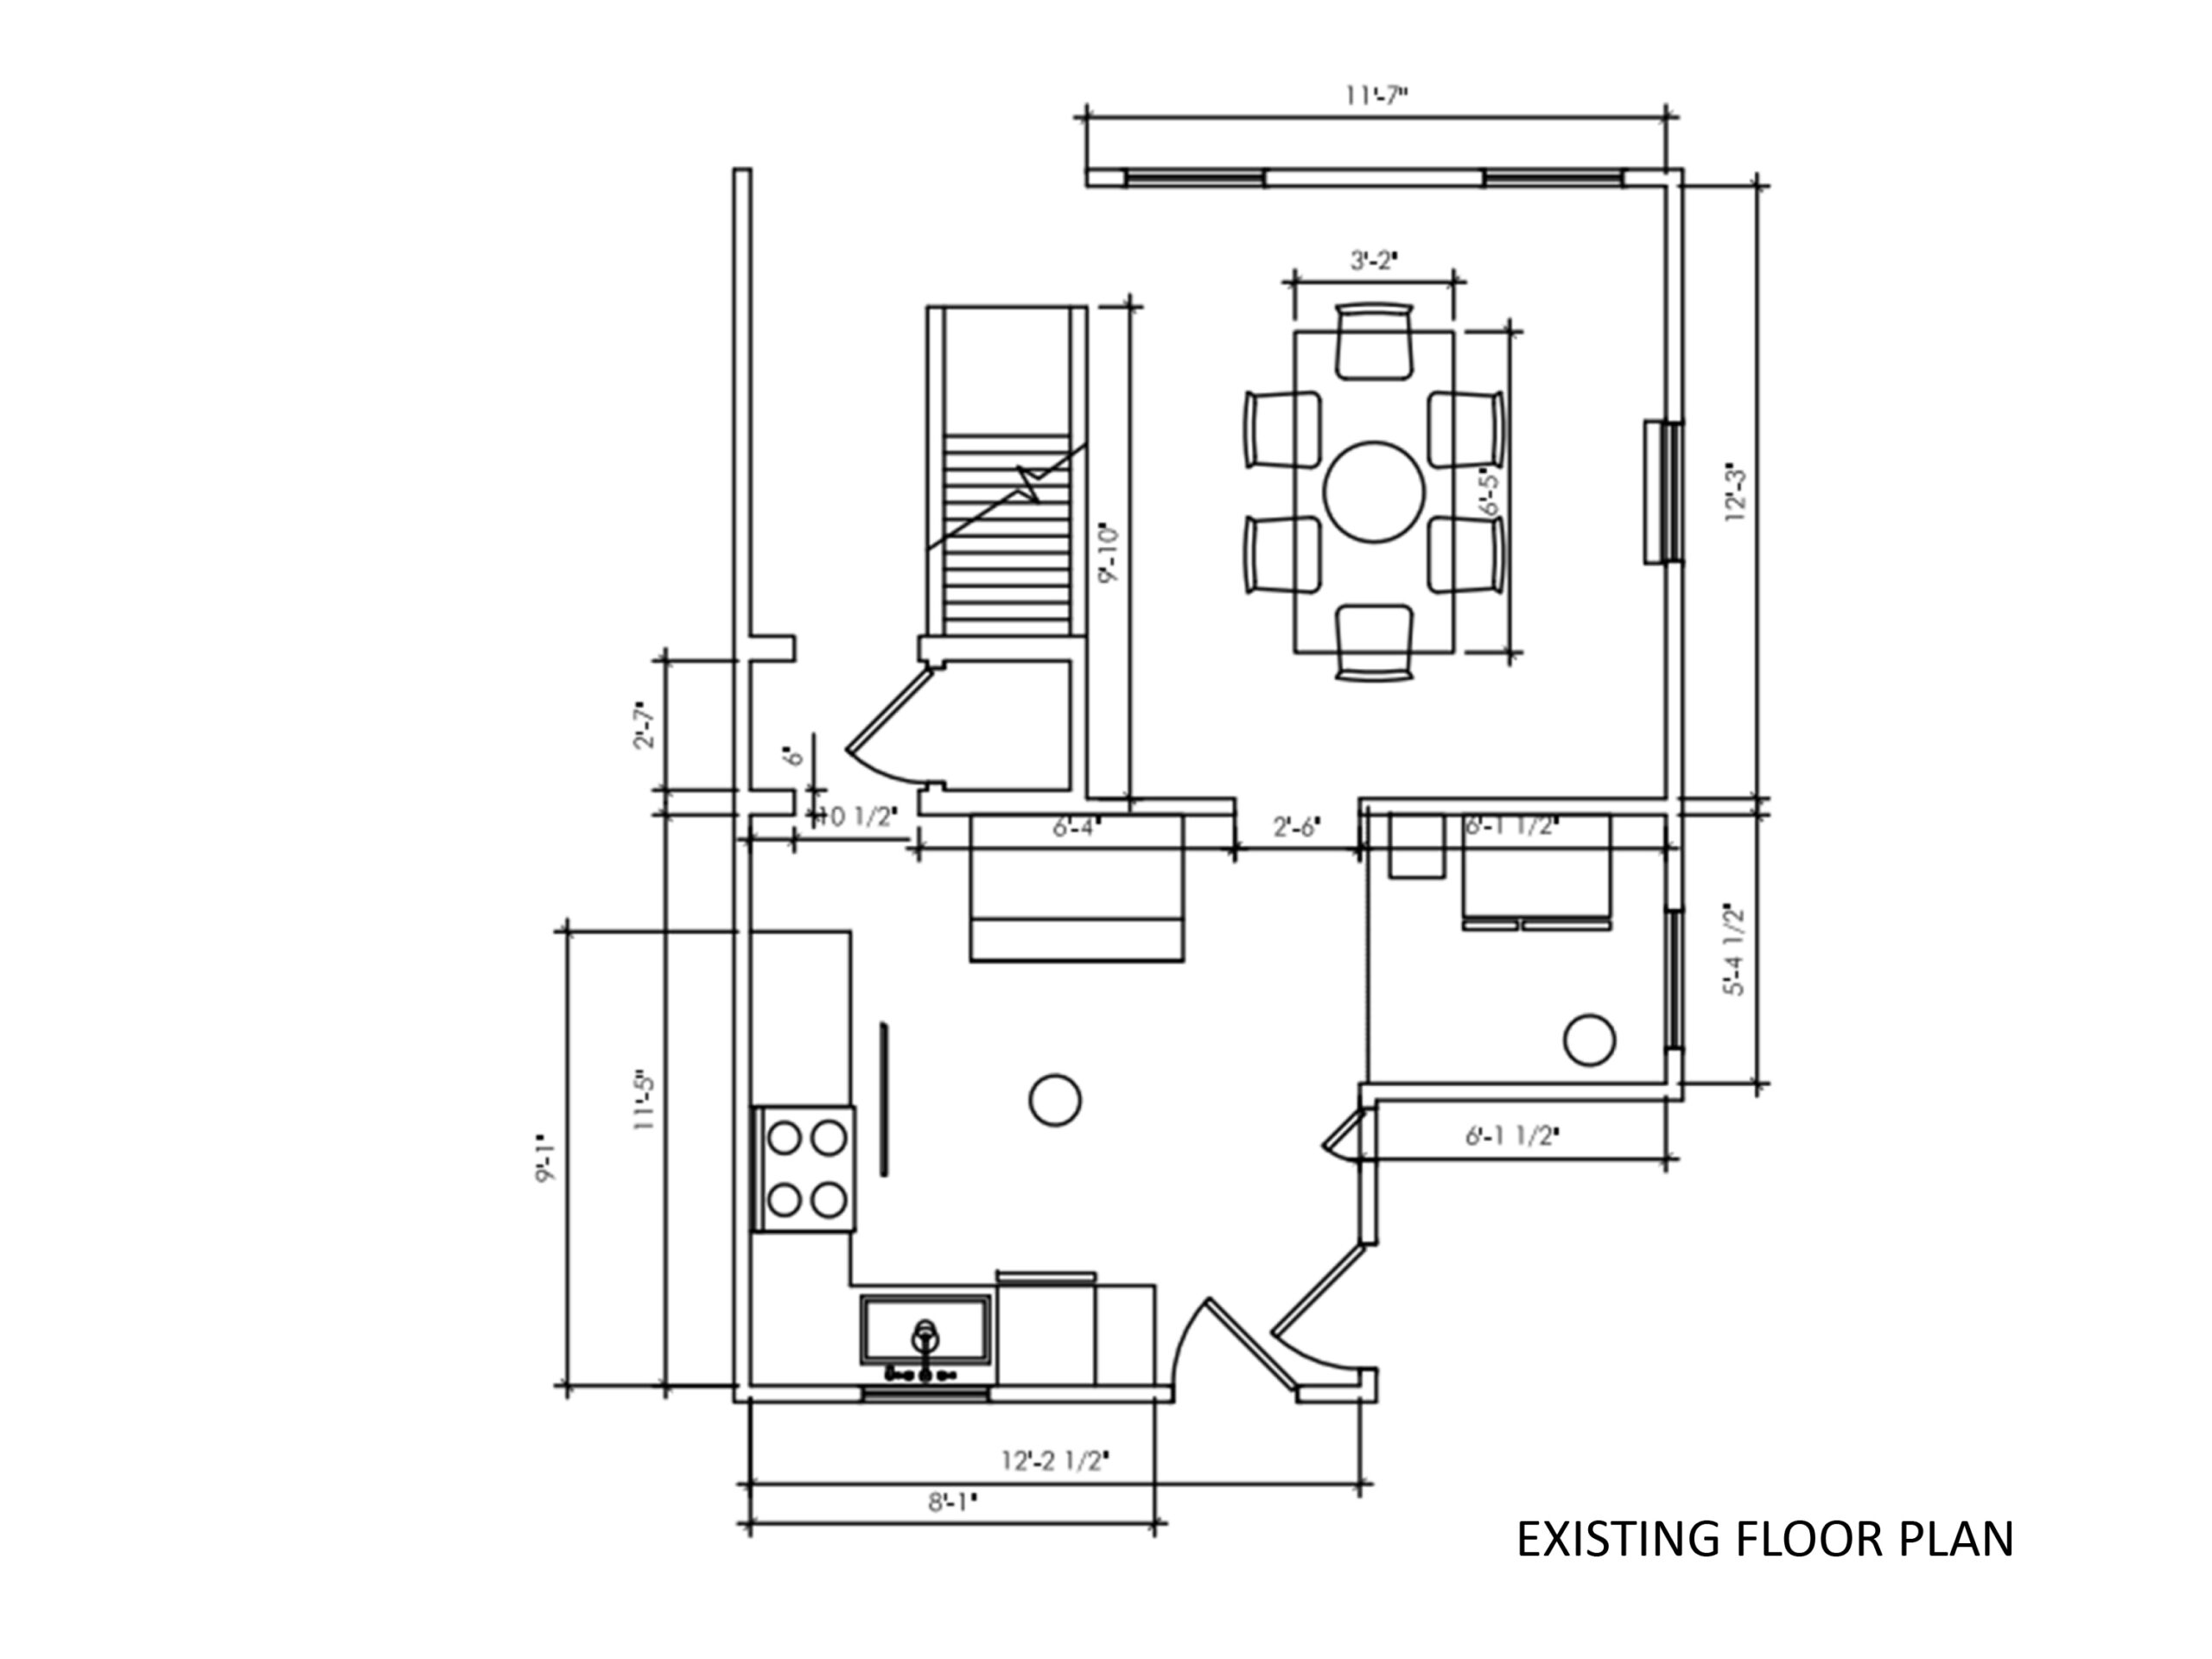 Interior design floor plans, interior floor plans, furniture layout, existing floor plan, art and accessories floor plans